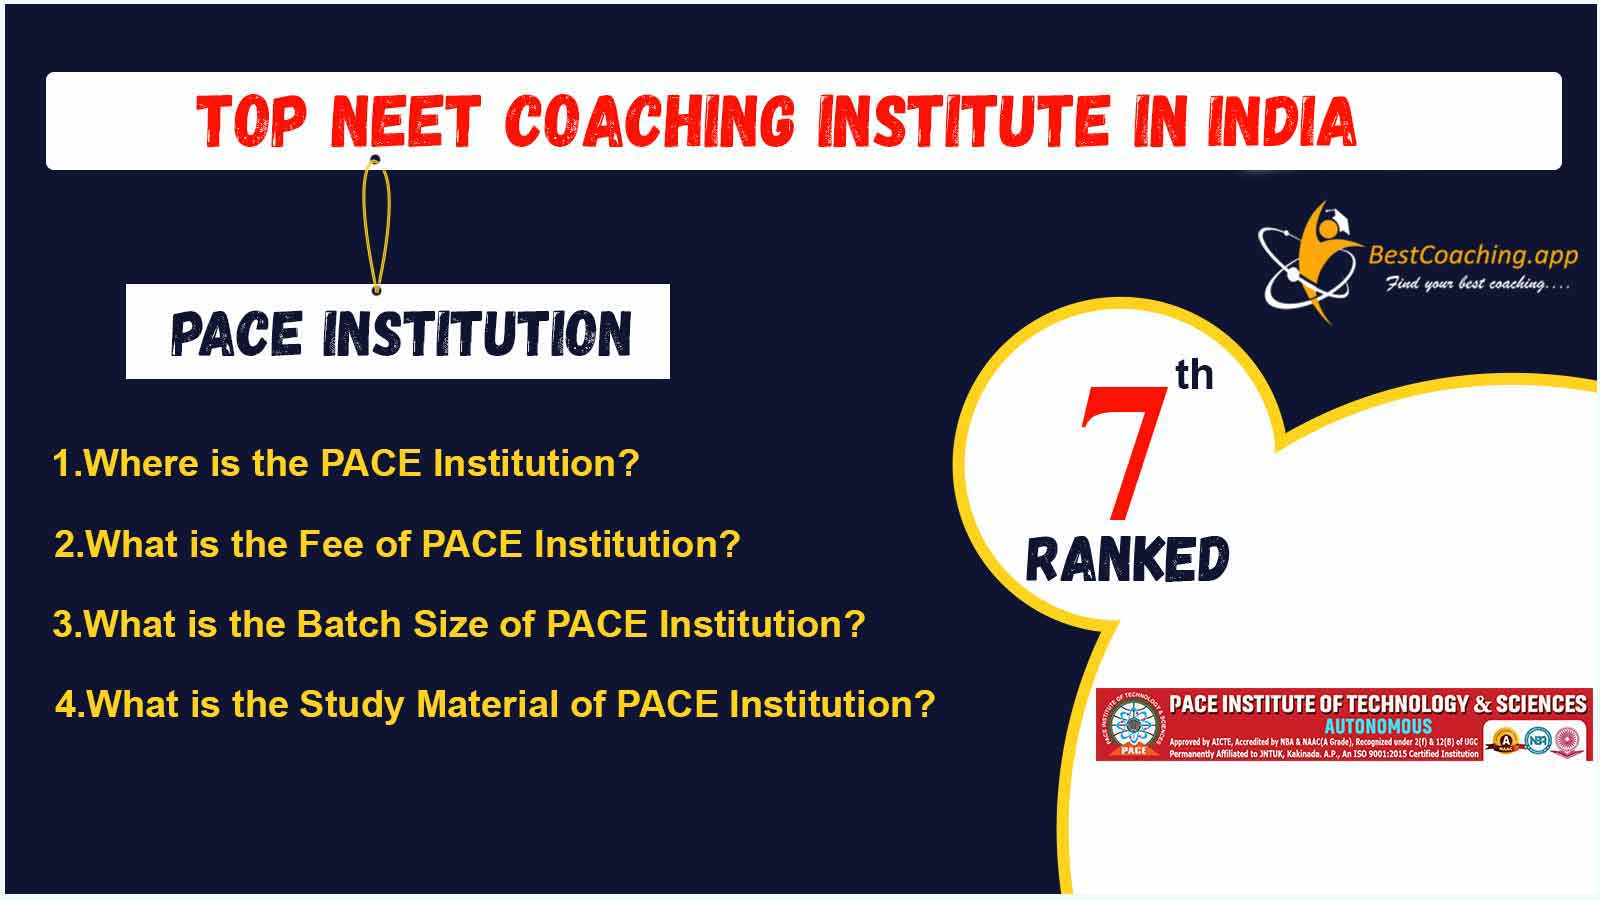 NEET Coaching In India